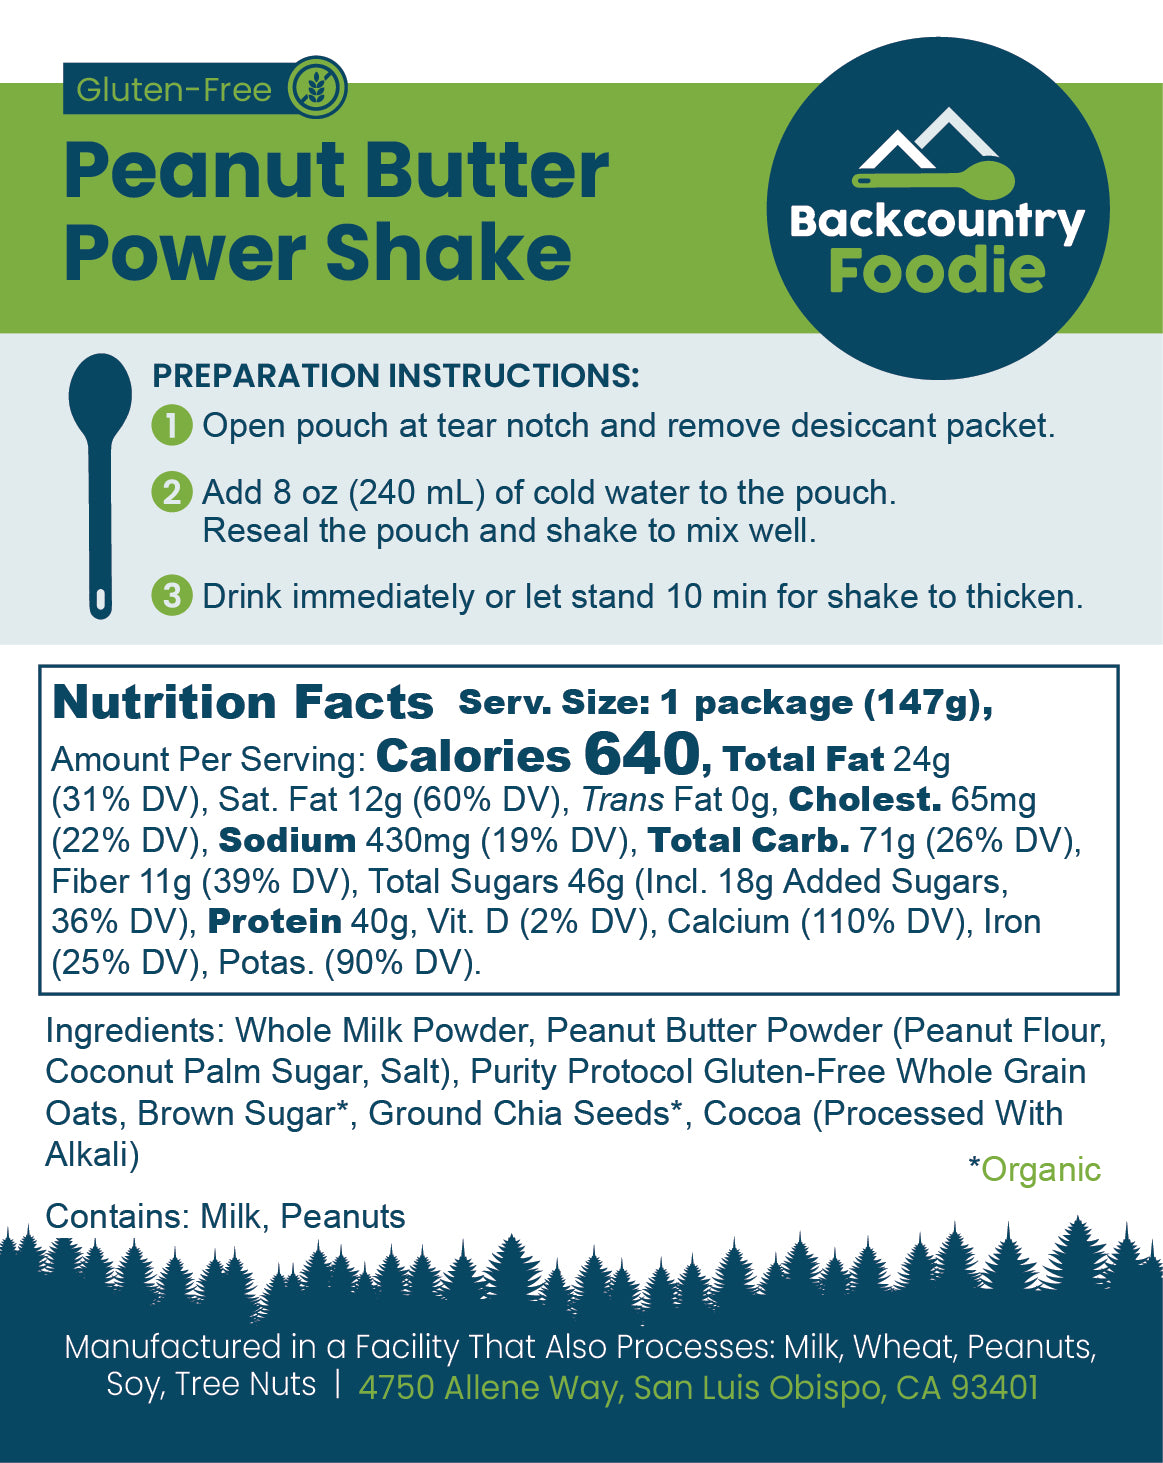 Backcountry Foodie - Peanut Butter Power Shake, Gluten-Free